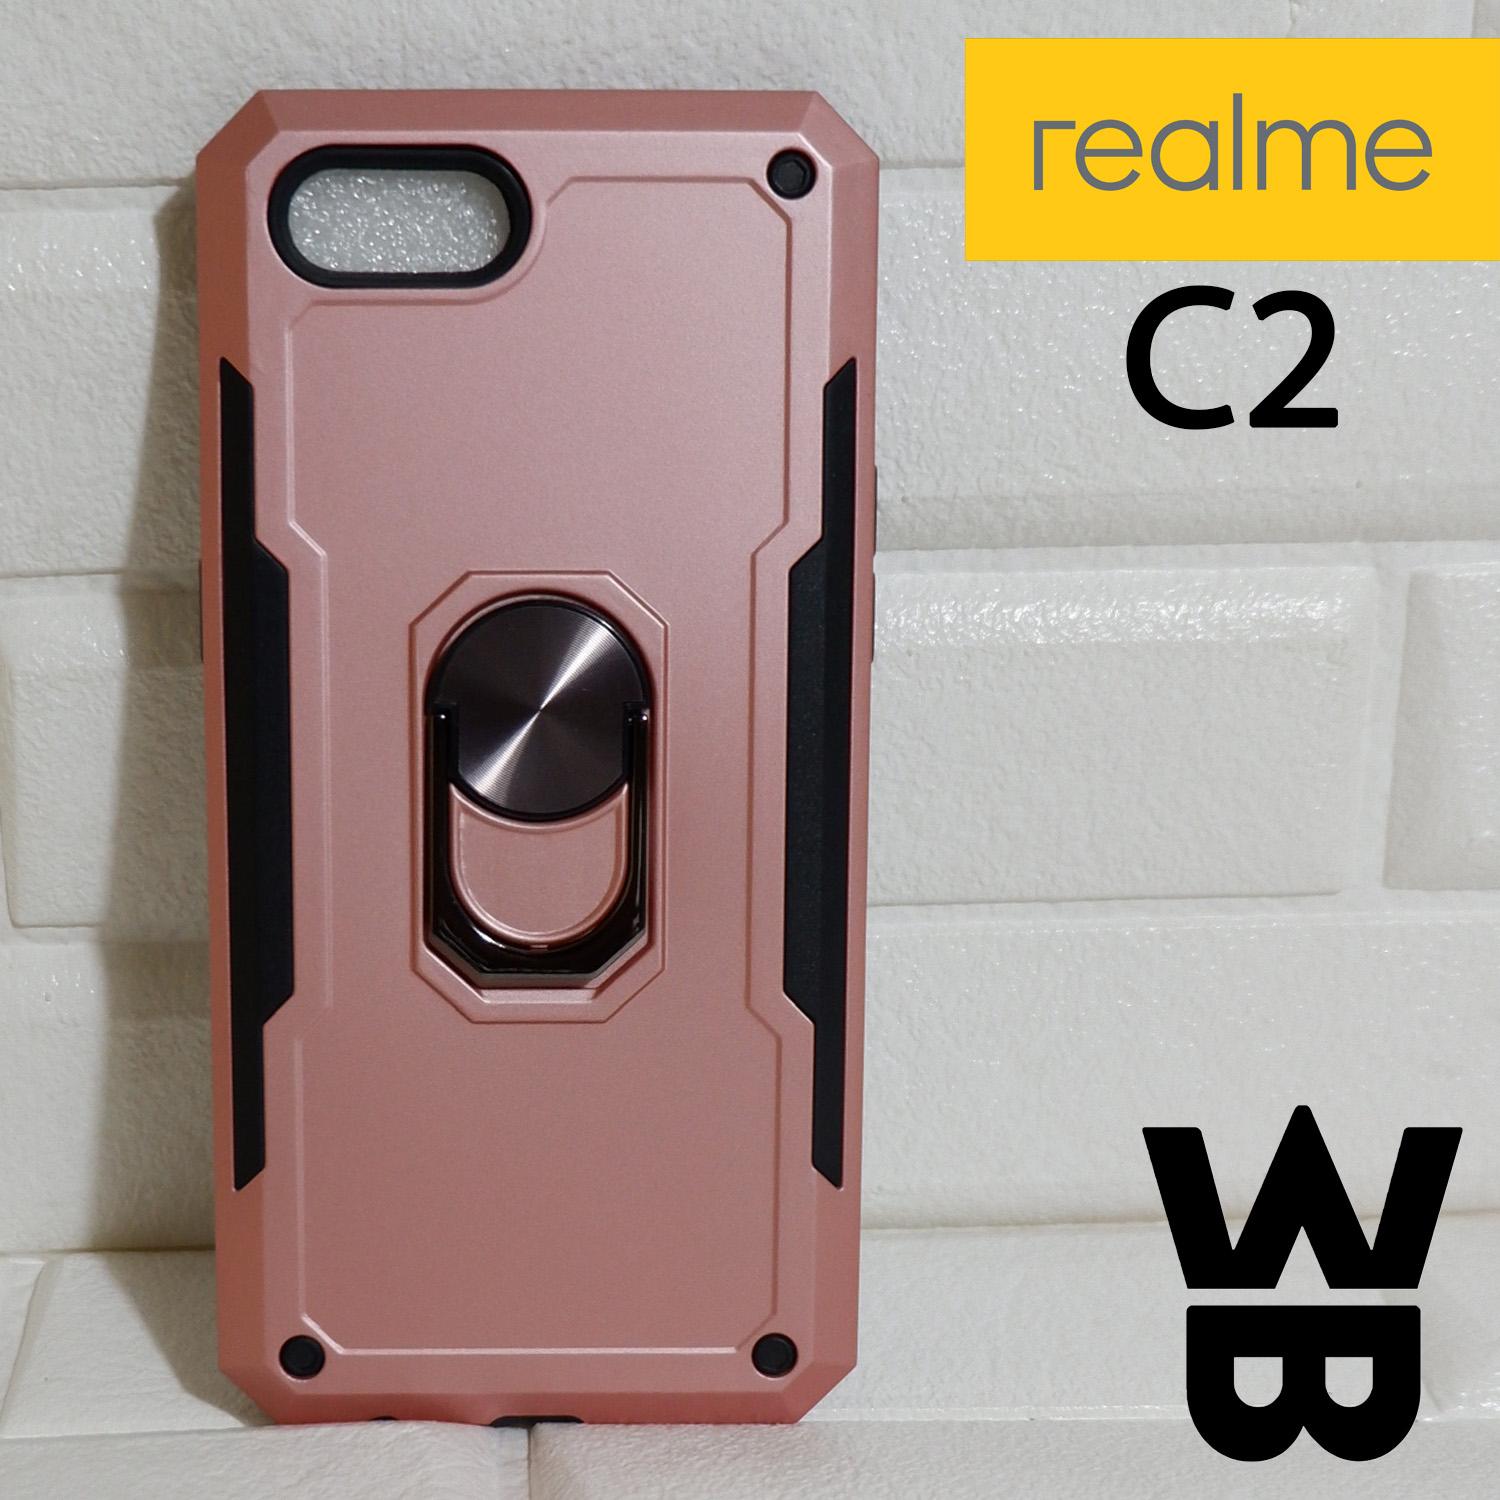 C2 casing realme Review Casing